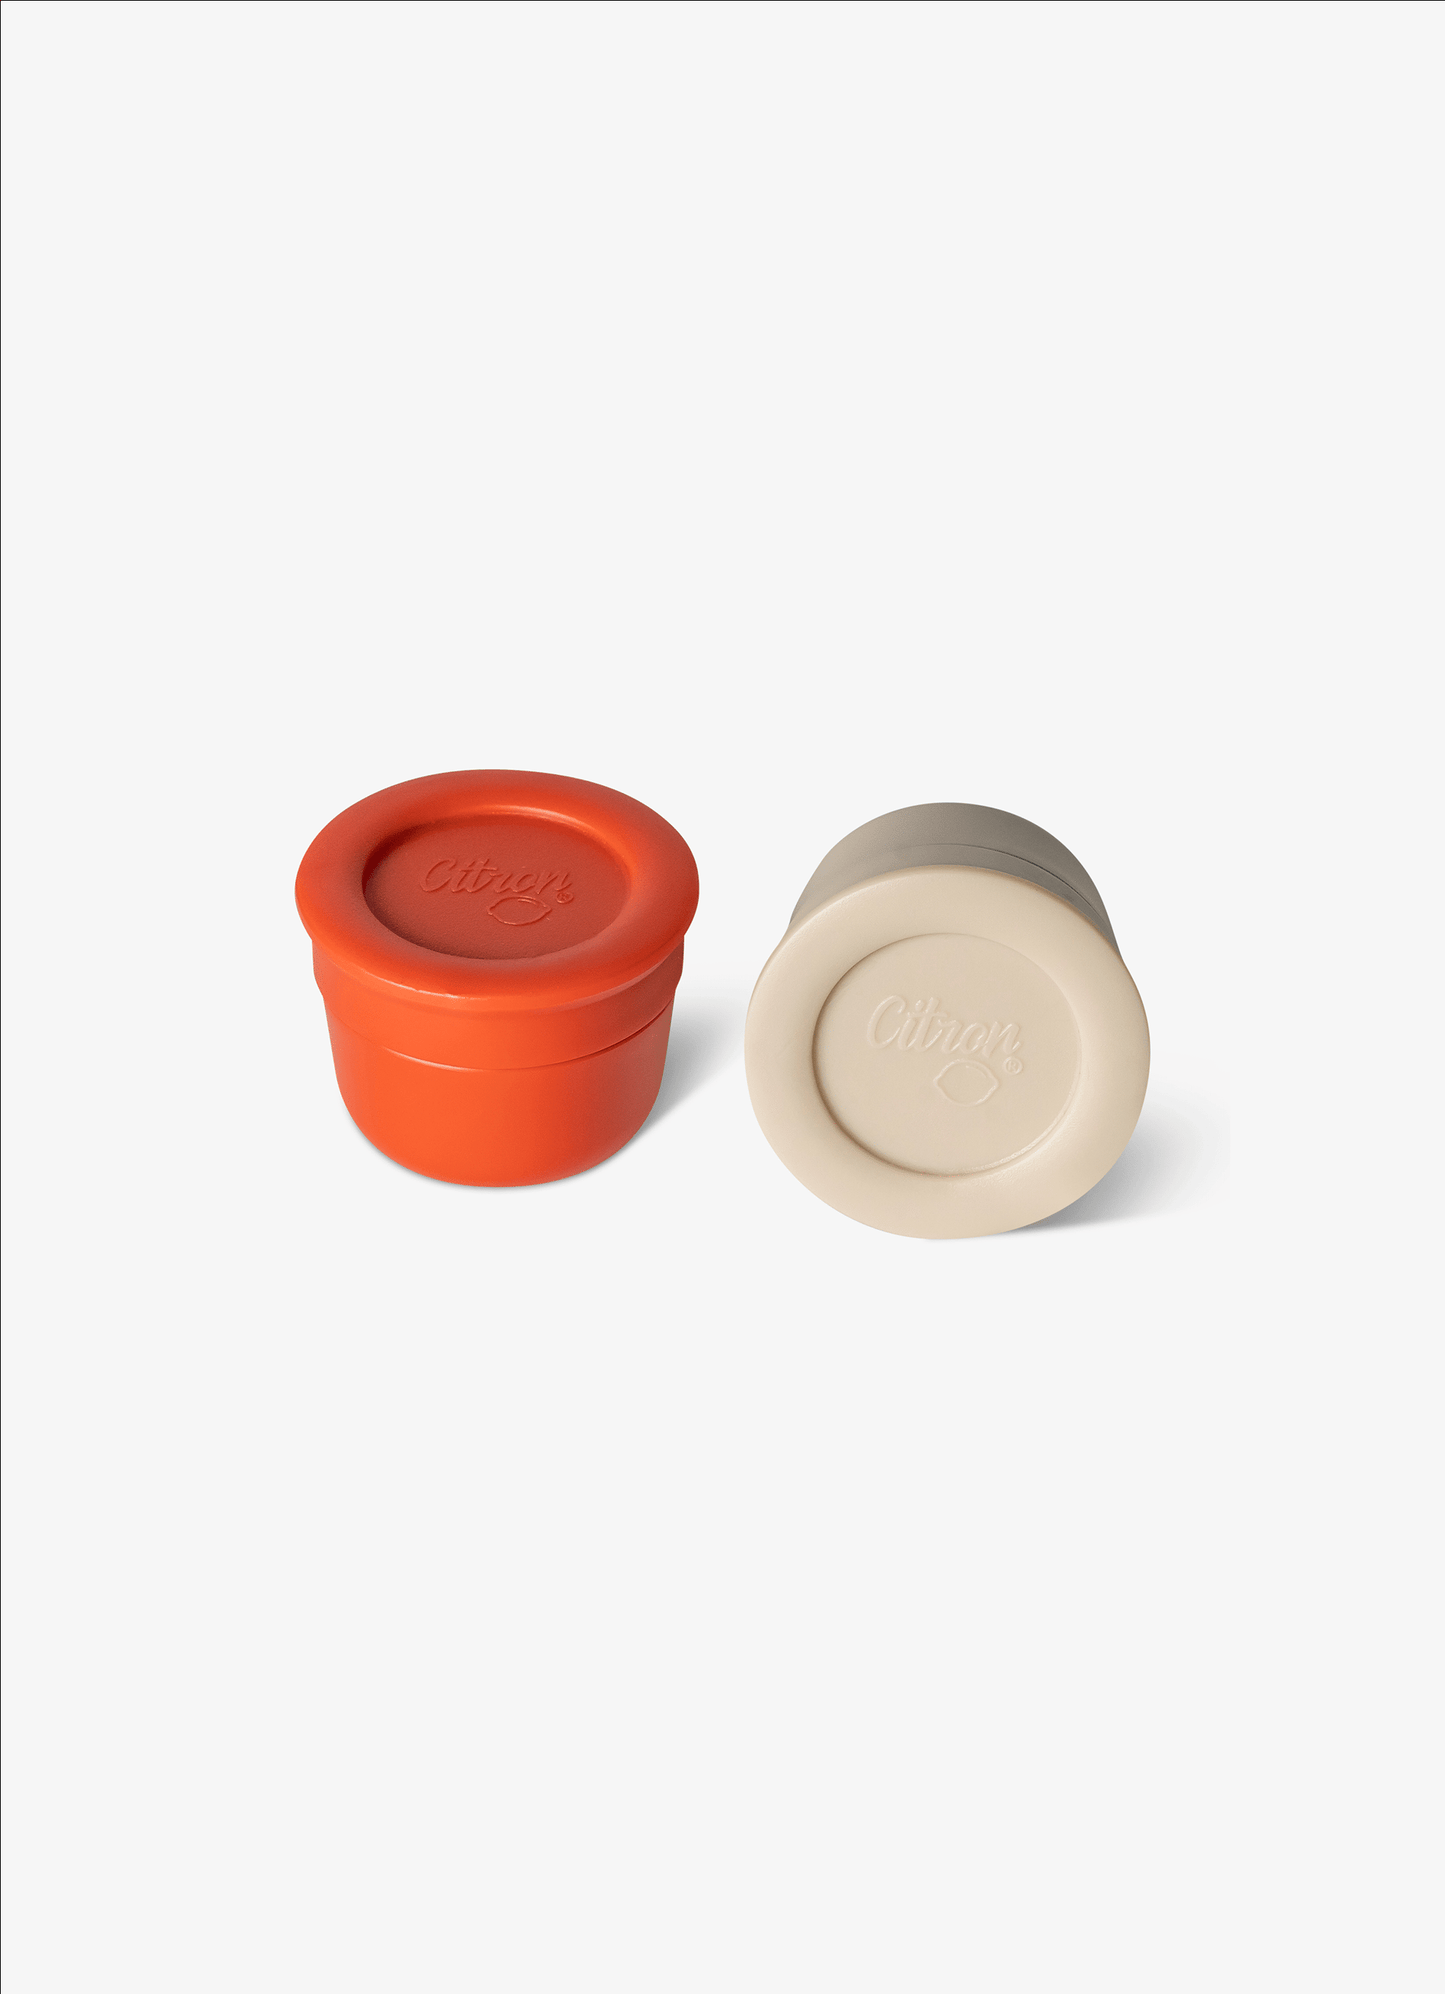 Saucers - Set of 2 - Brick/Beige